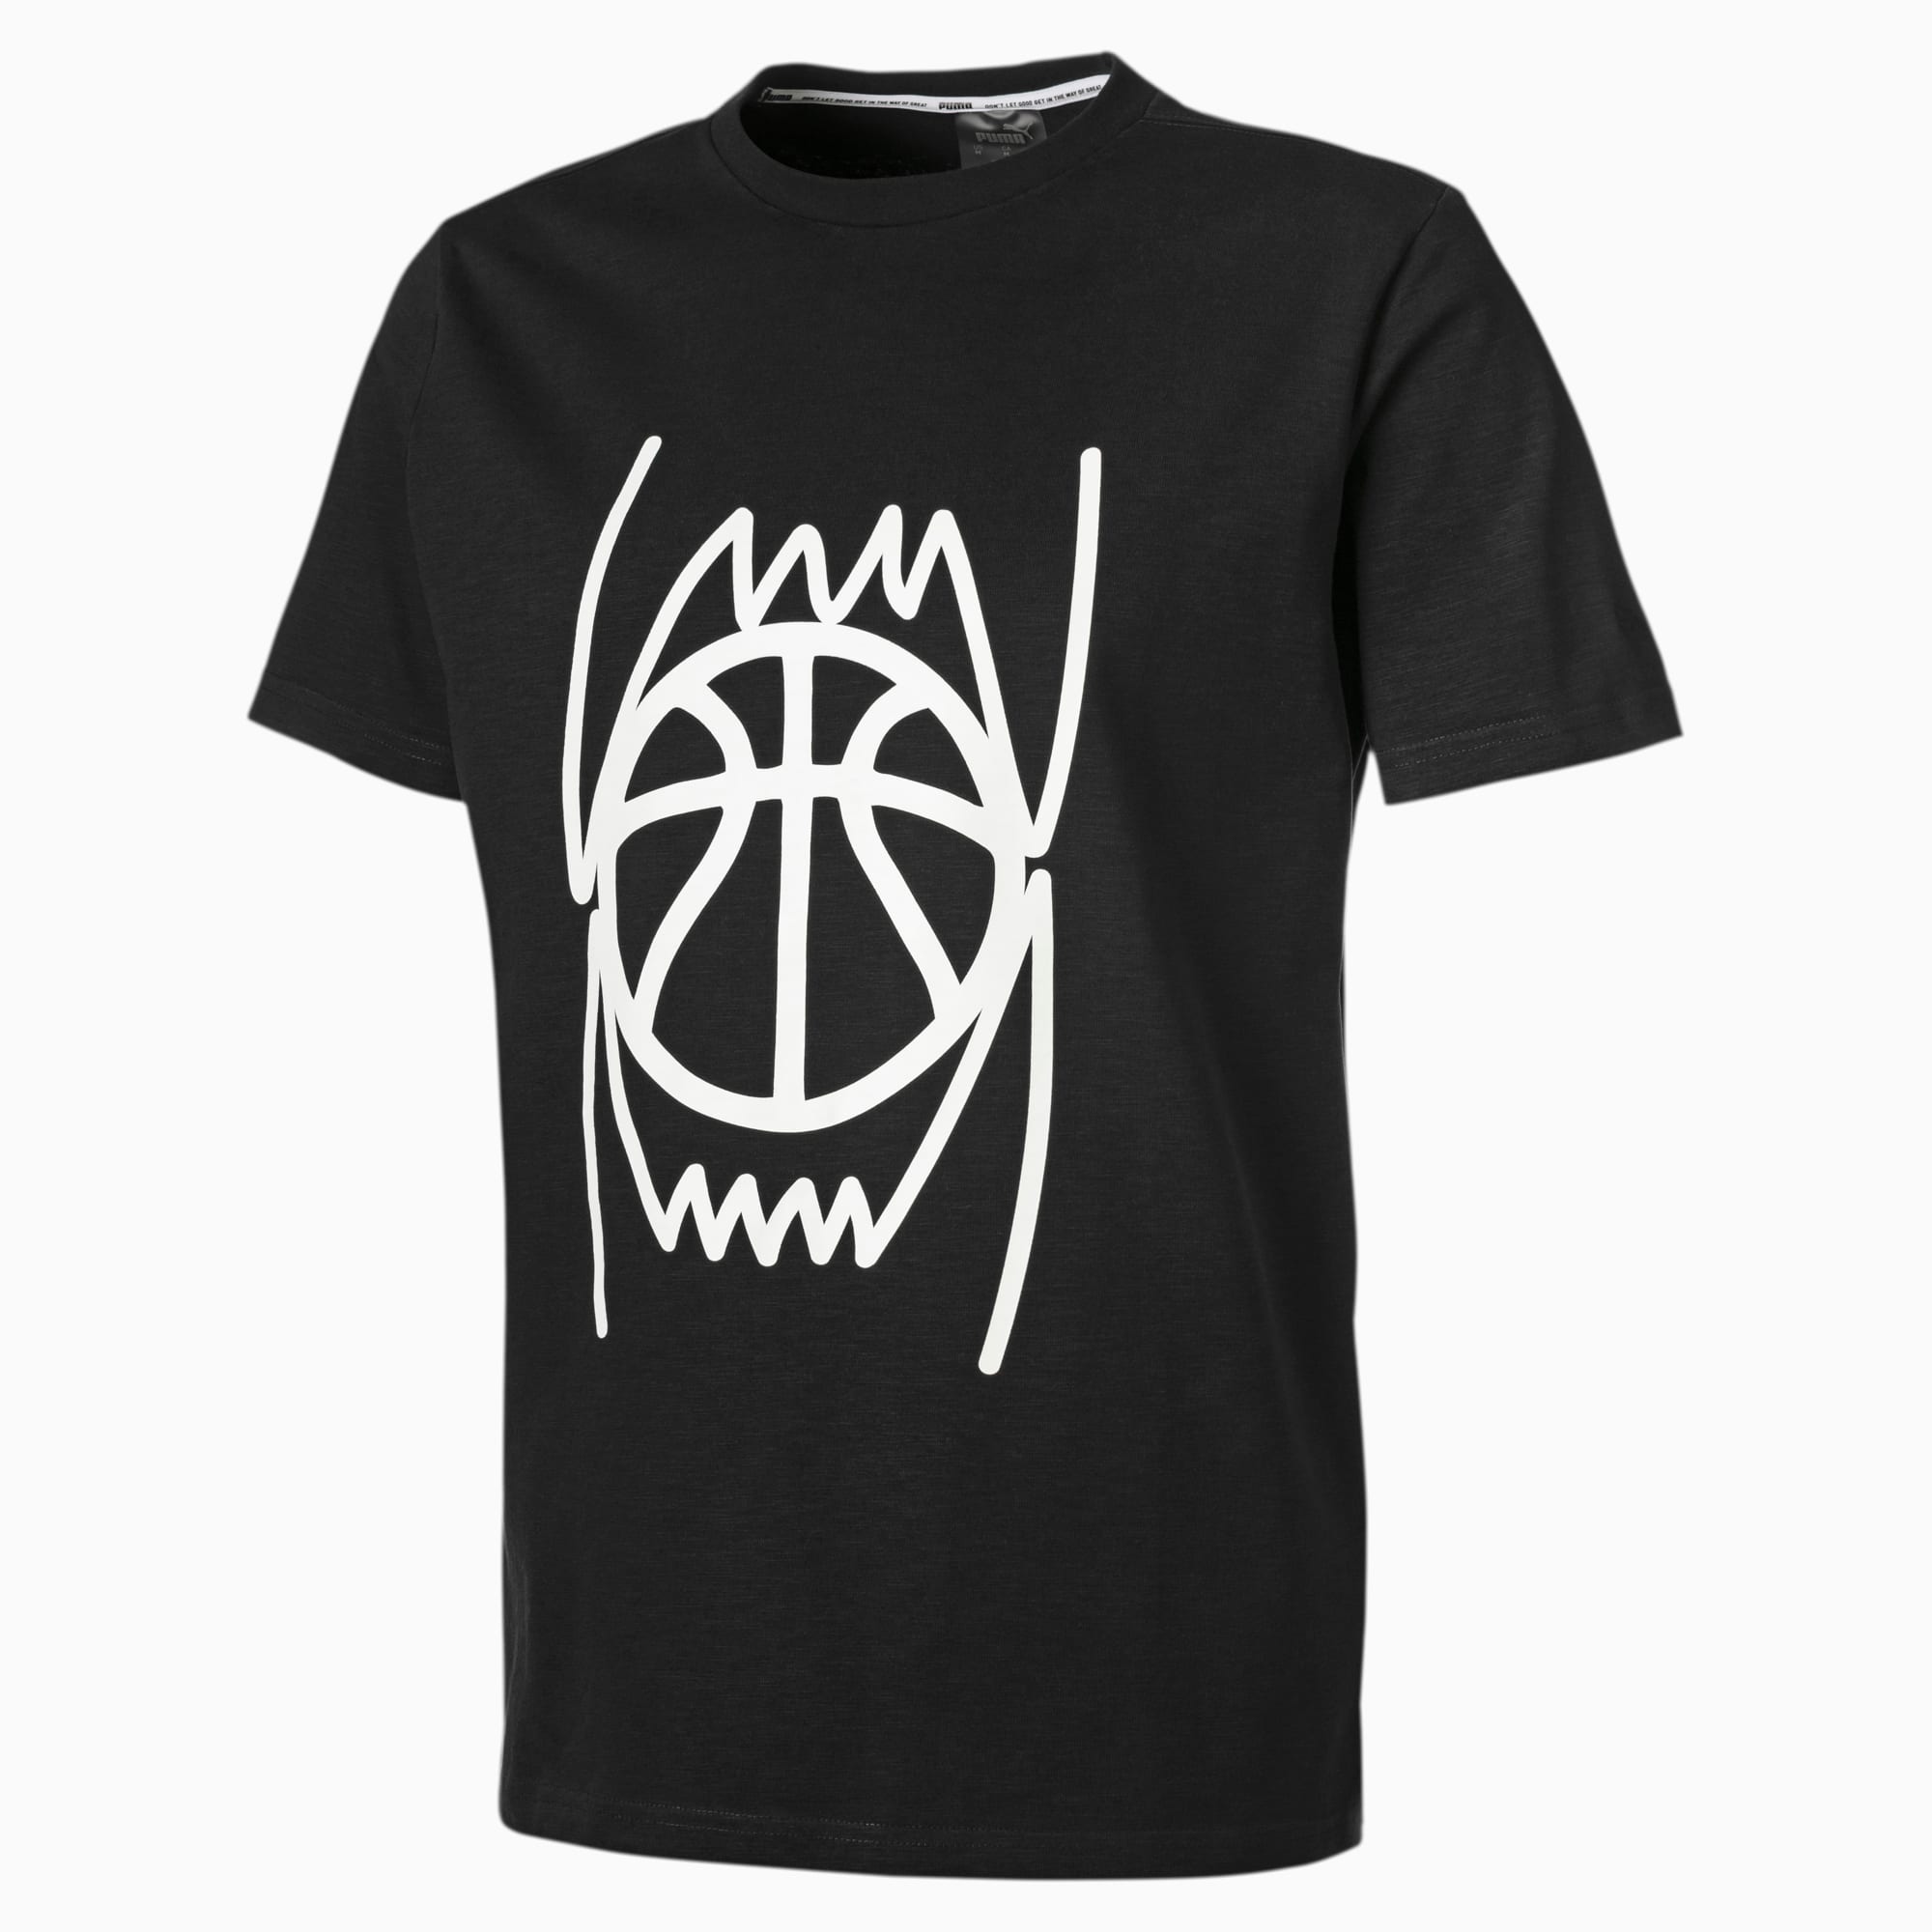 puma basketball t shirt